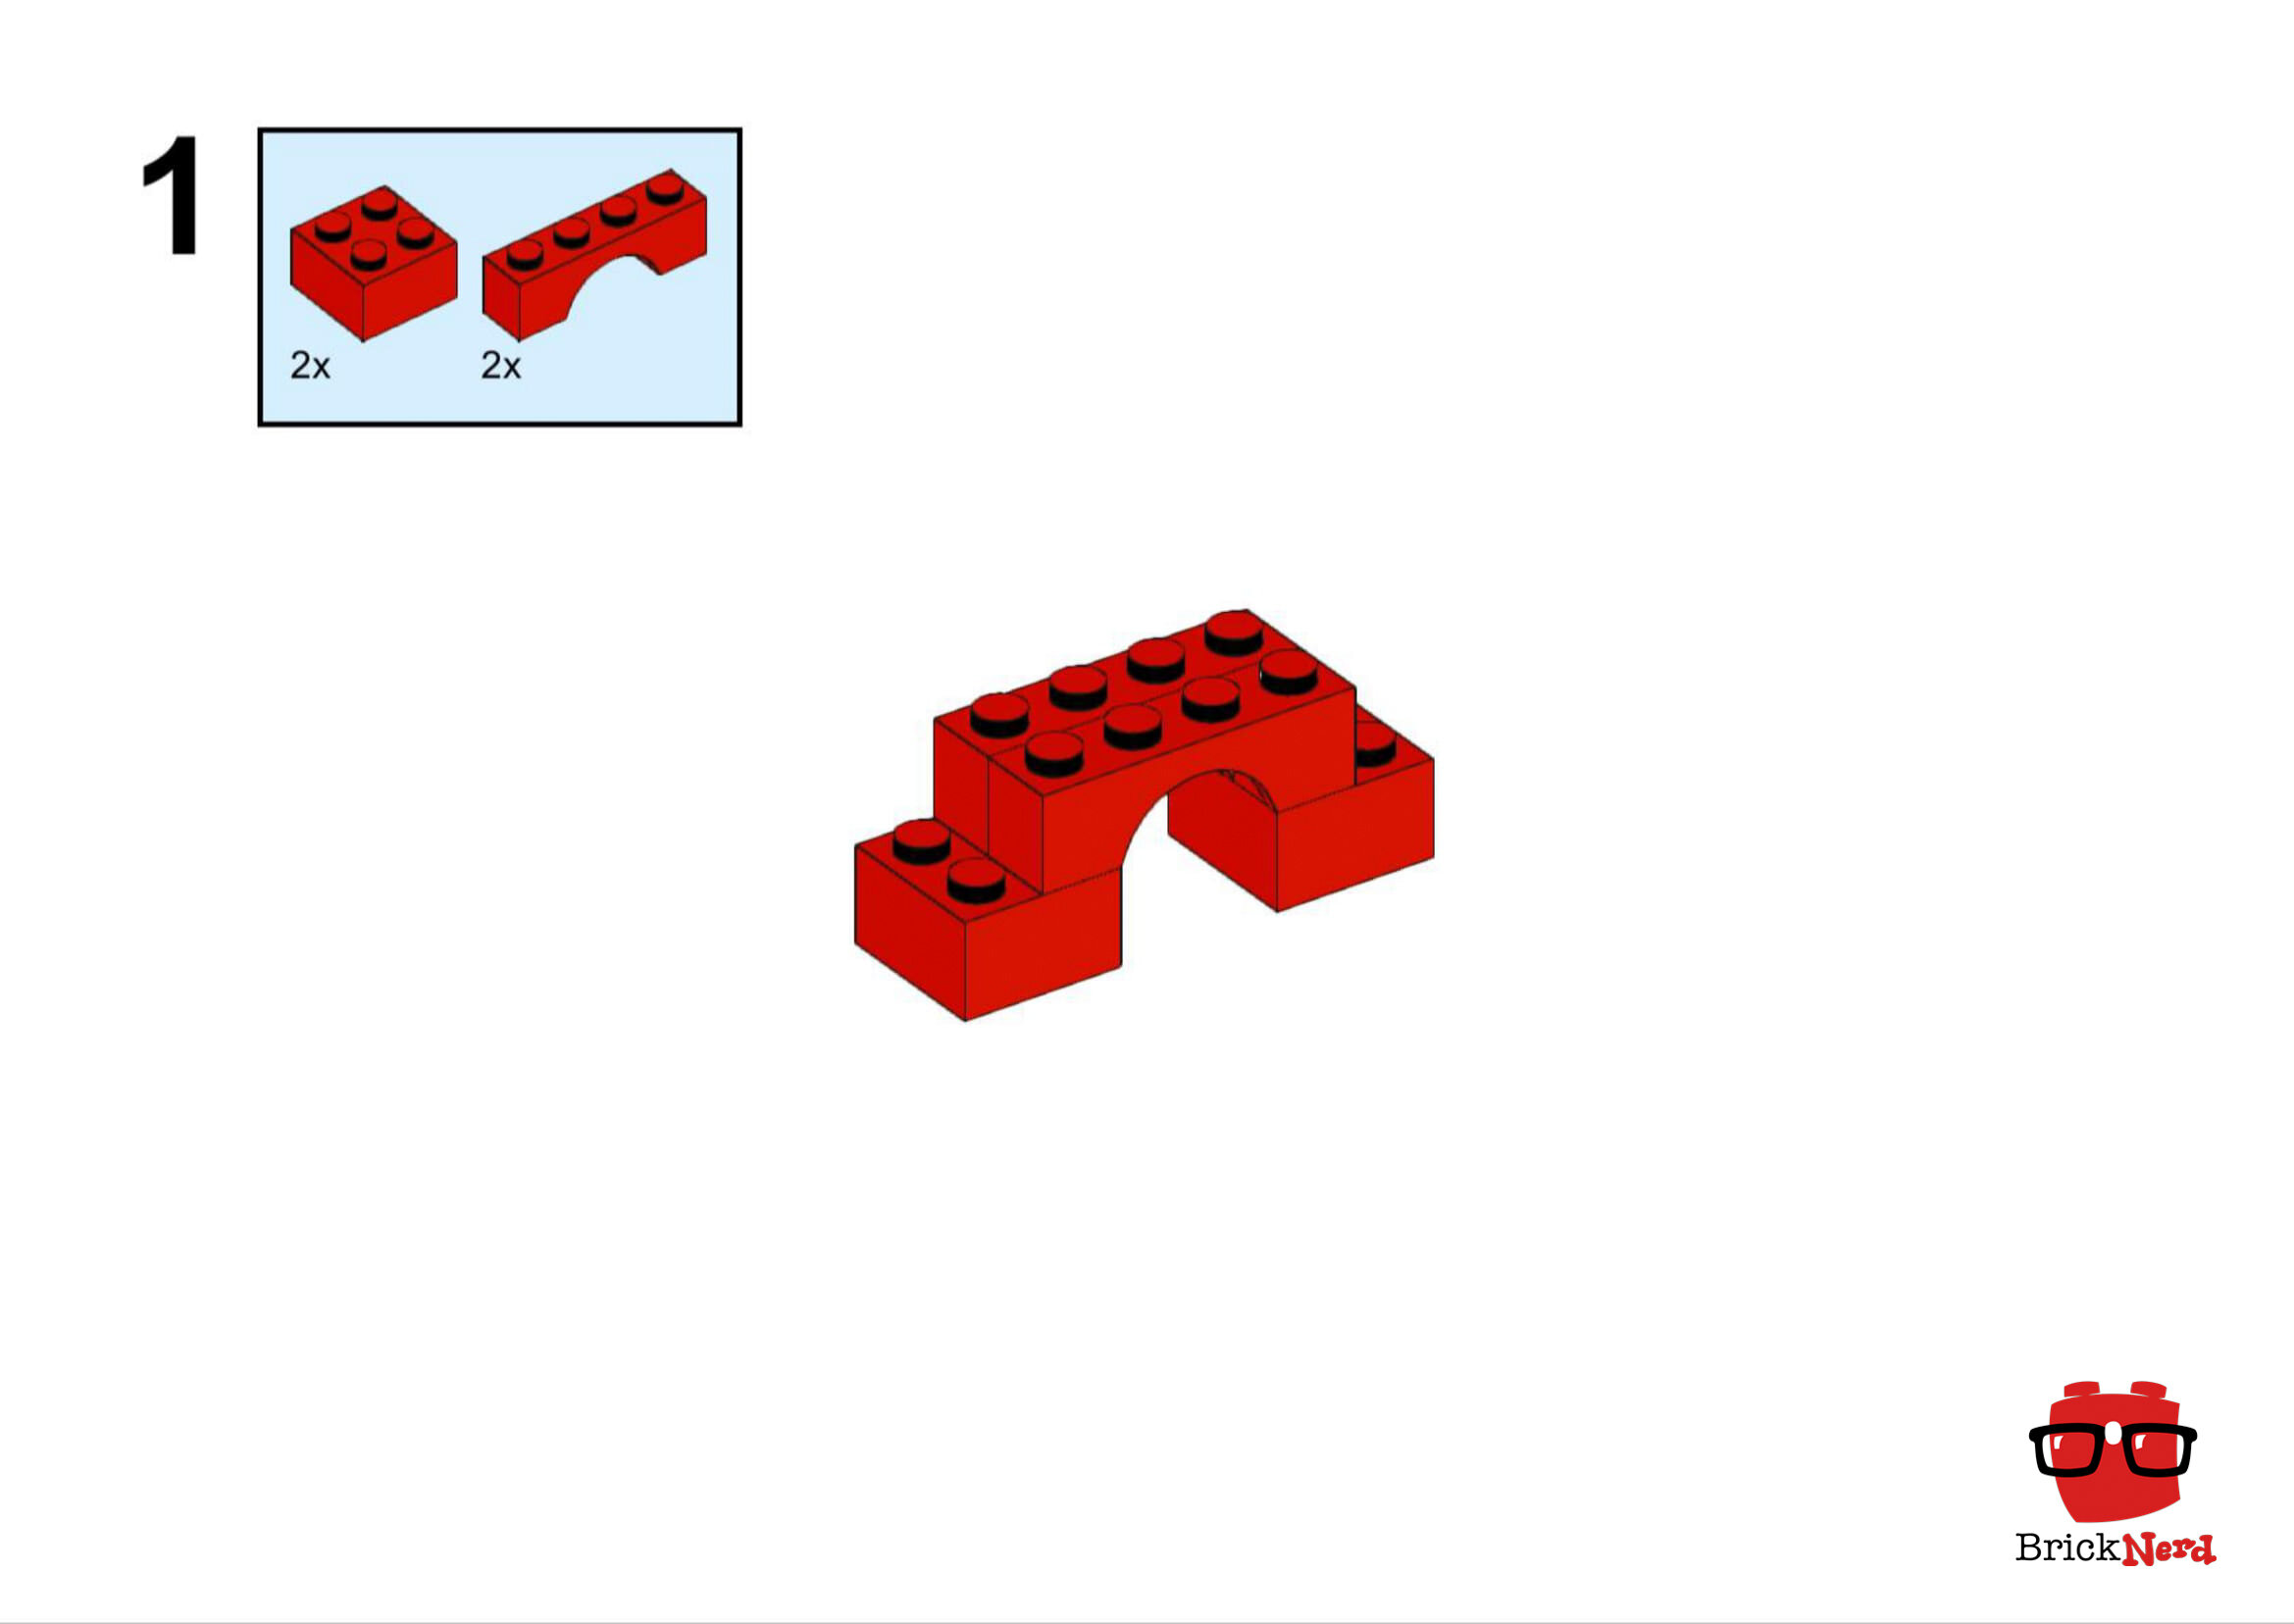 BrickNerd Puzzle - Single Piece Instructions-1.jpg